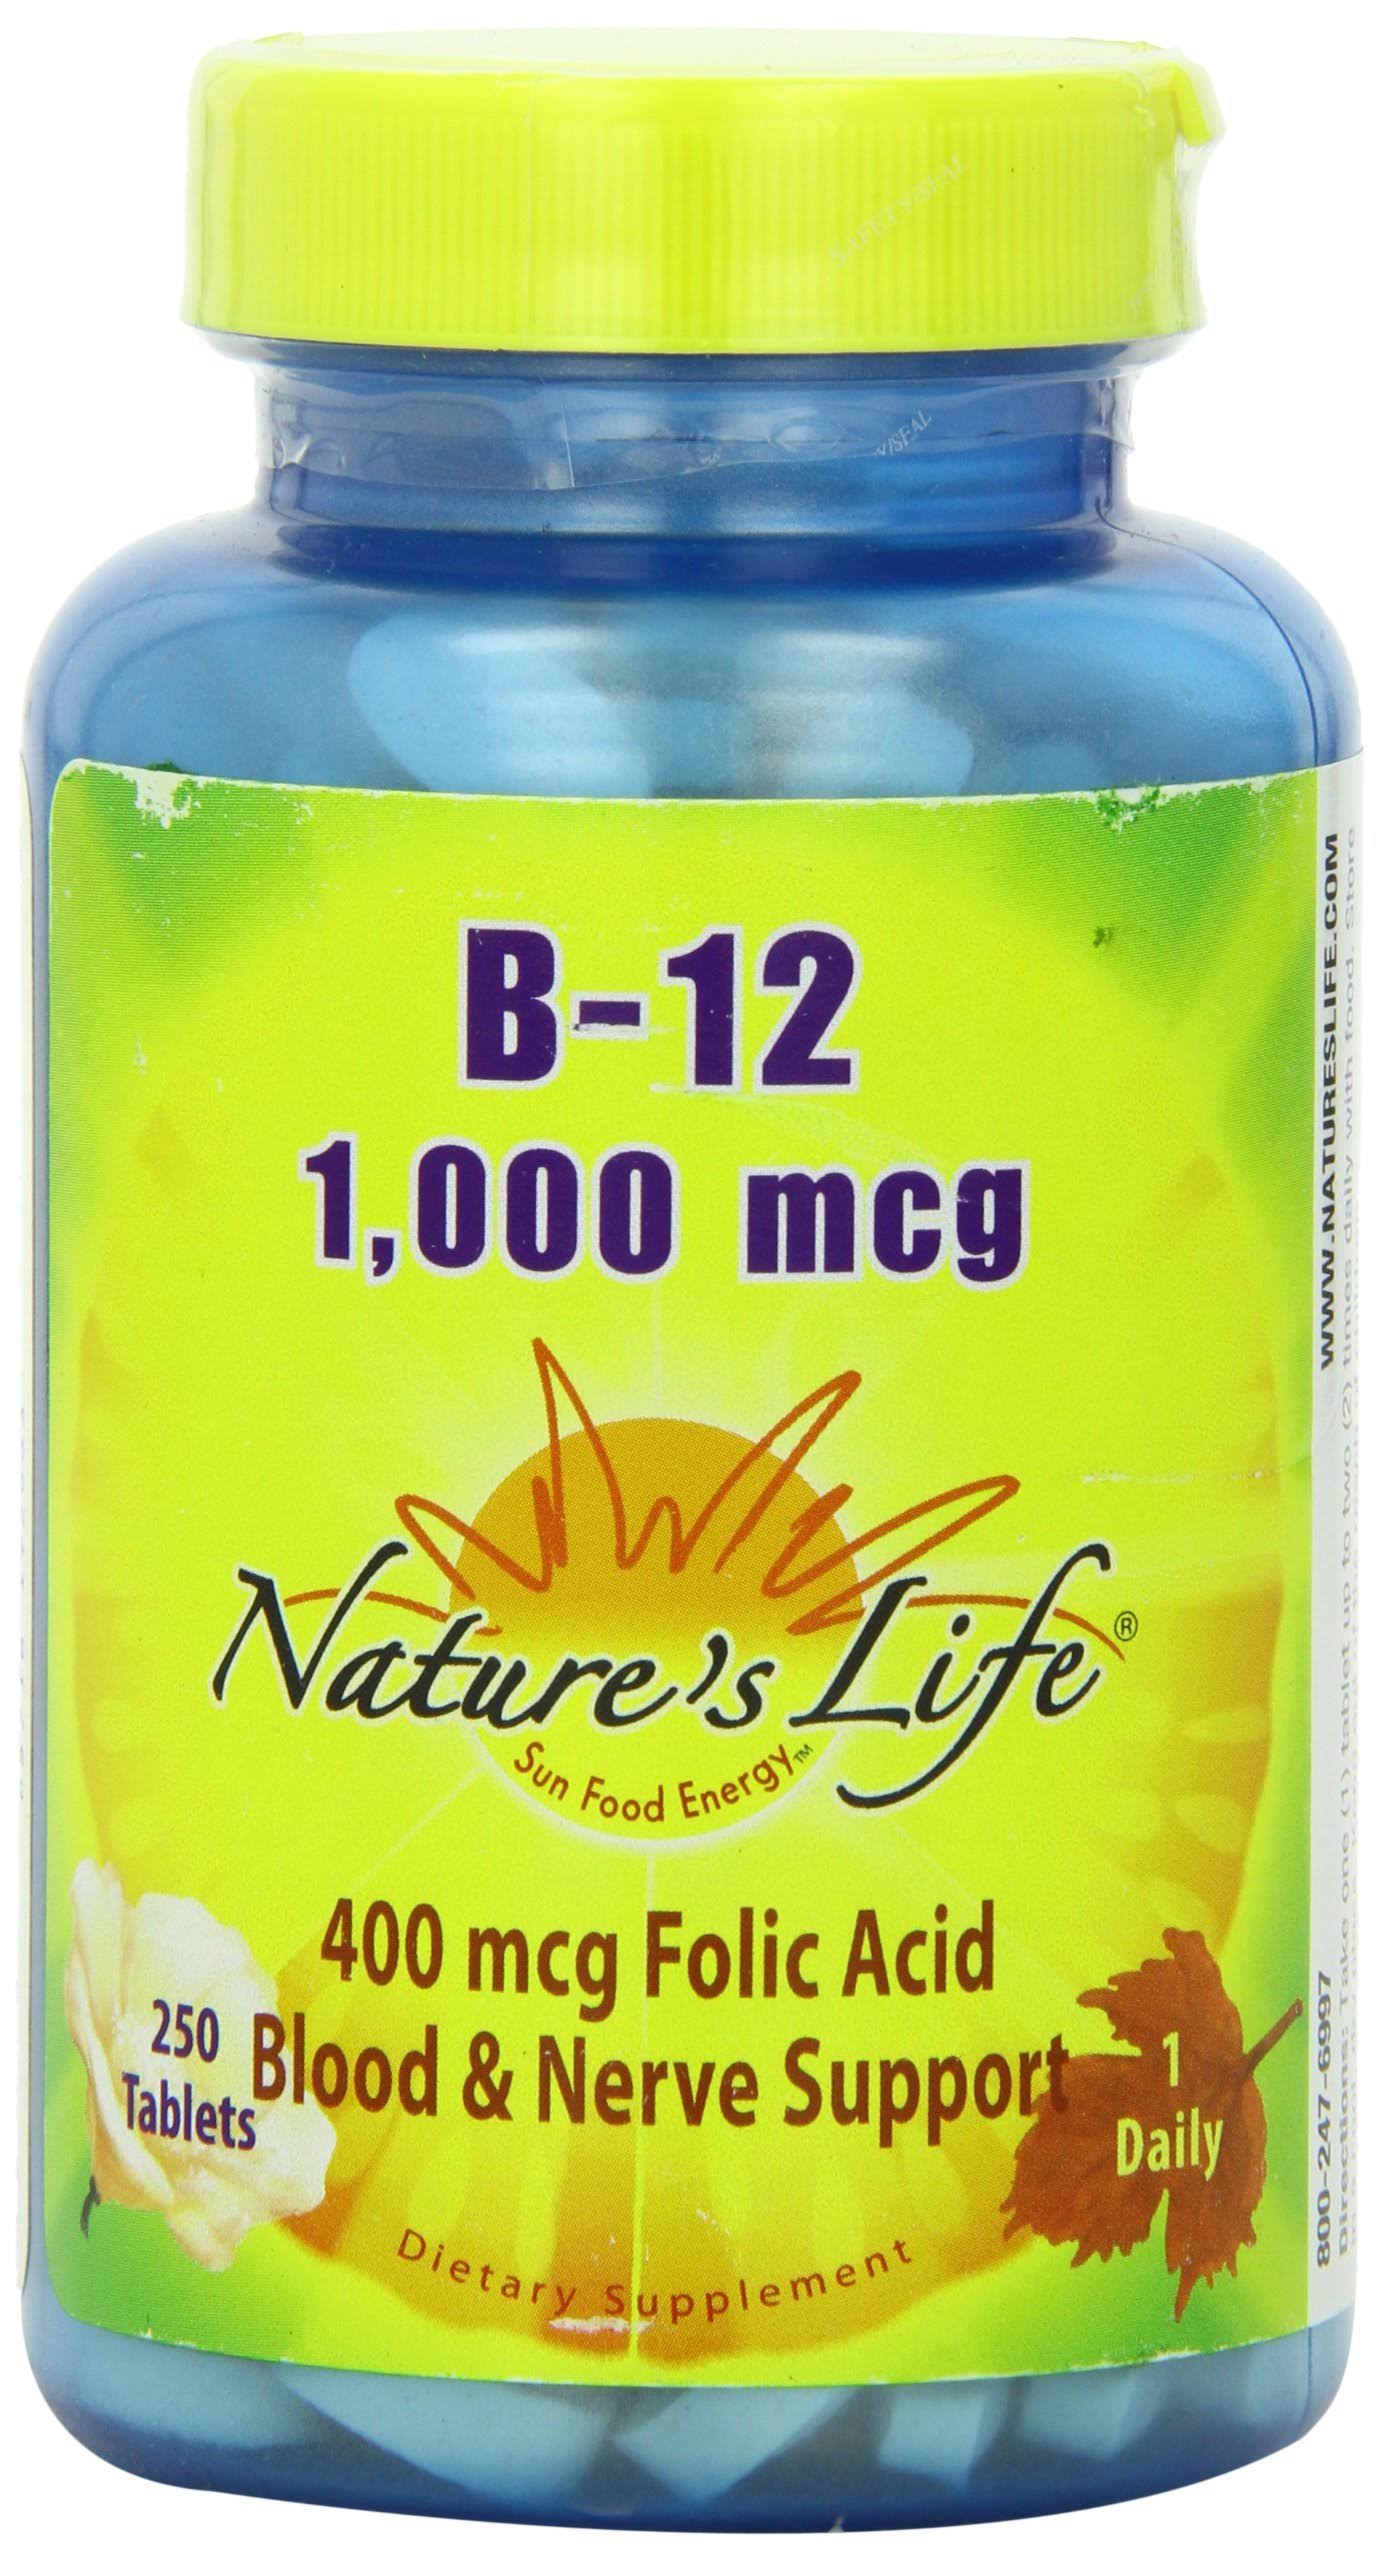 Nature's Life B-12 1,000 mcg - 250 Tablets